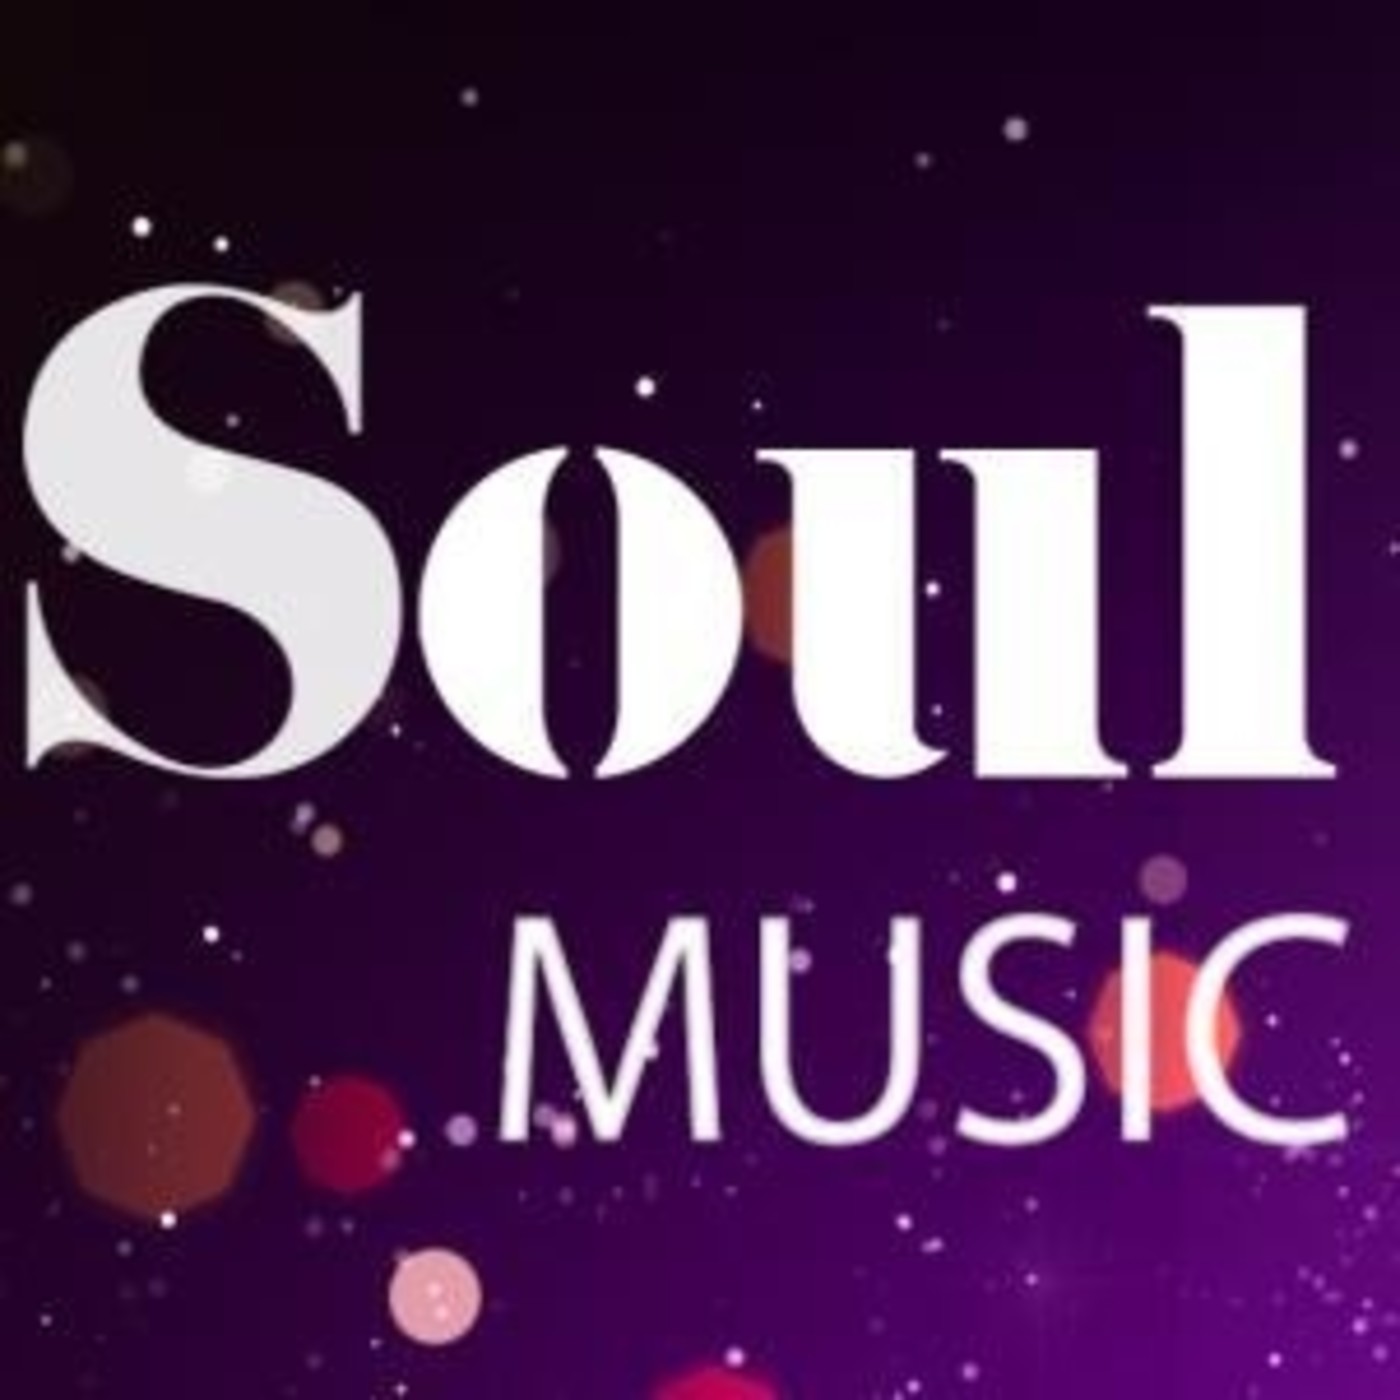 BLACK MUSIC: Best of 60`s soul music en Black Music en mp3 